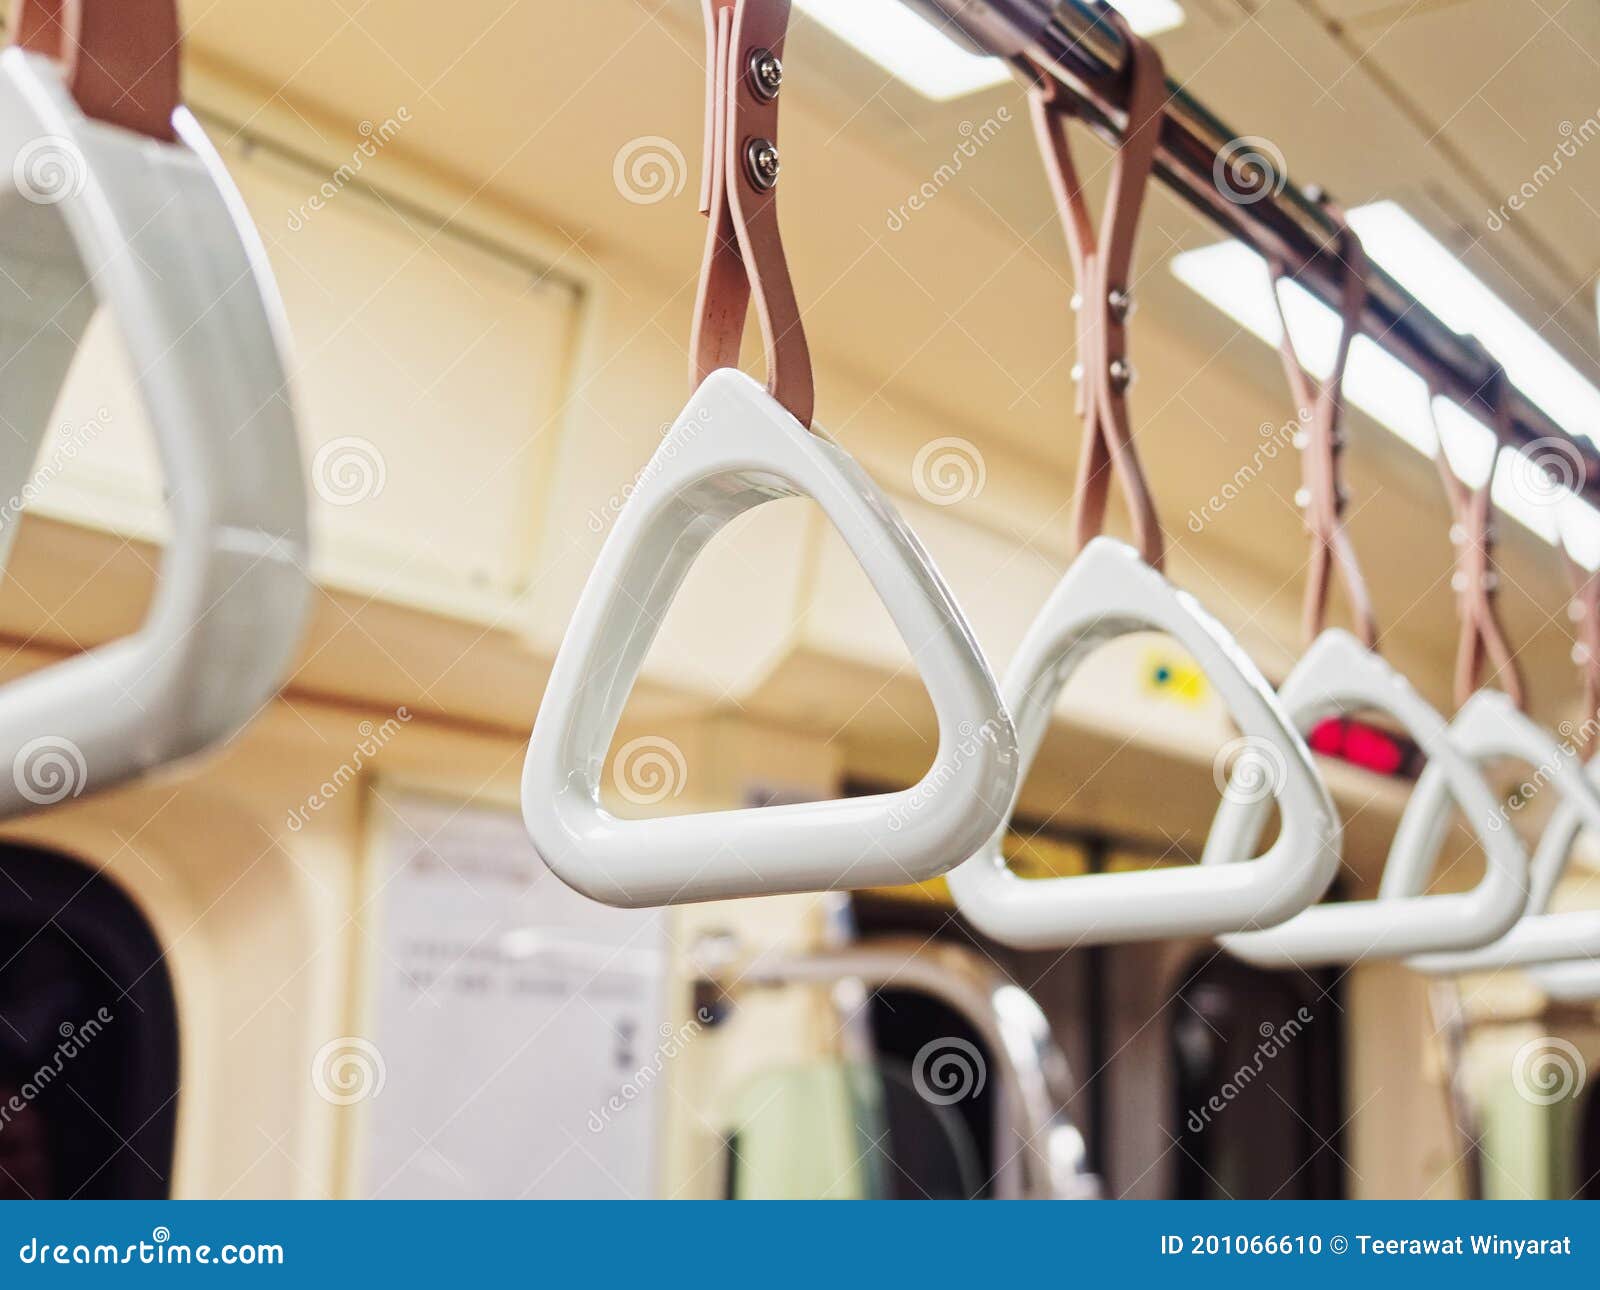 handrails in subway train public transportation